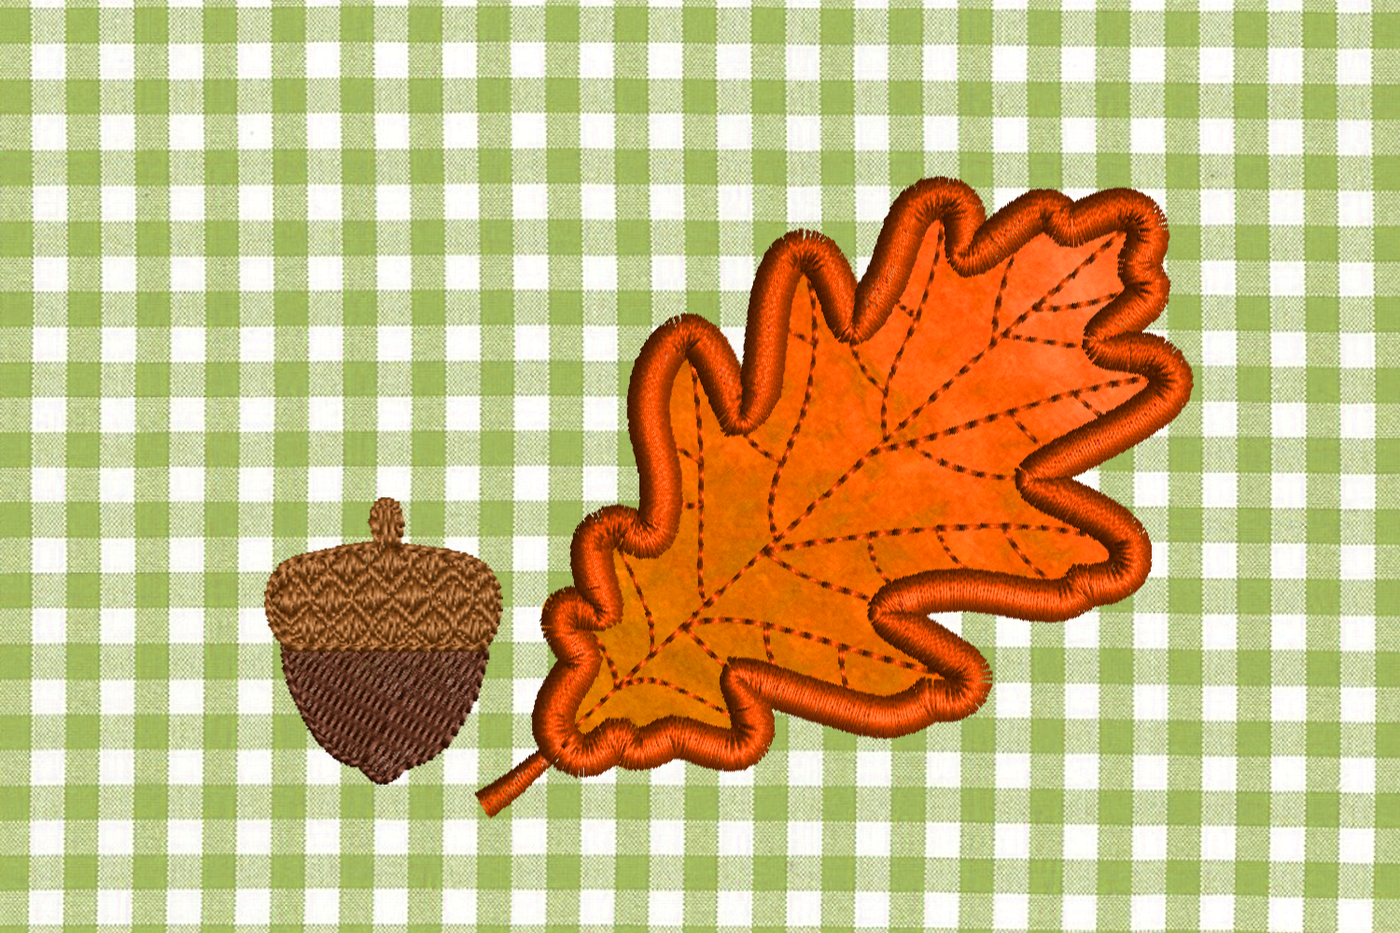 Applique oak leaf and embroidered acorn.